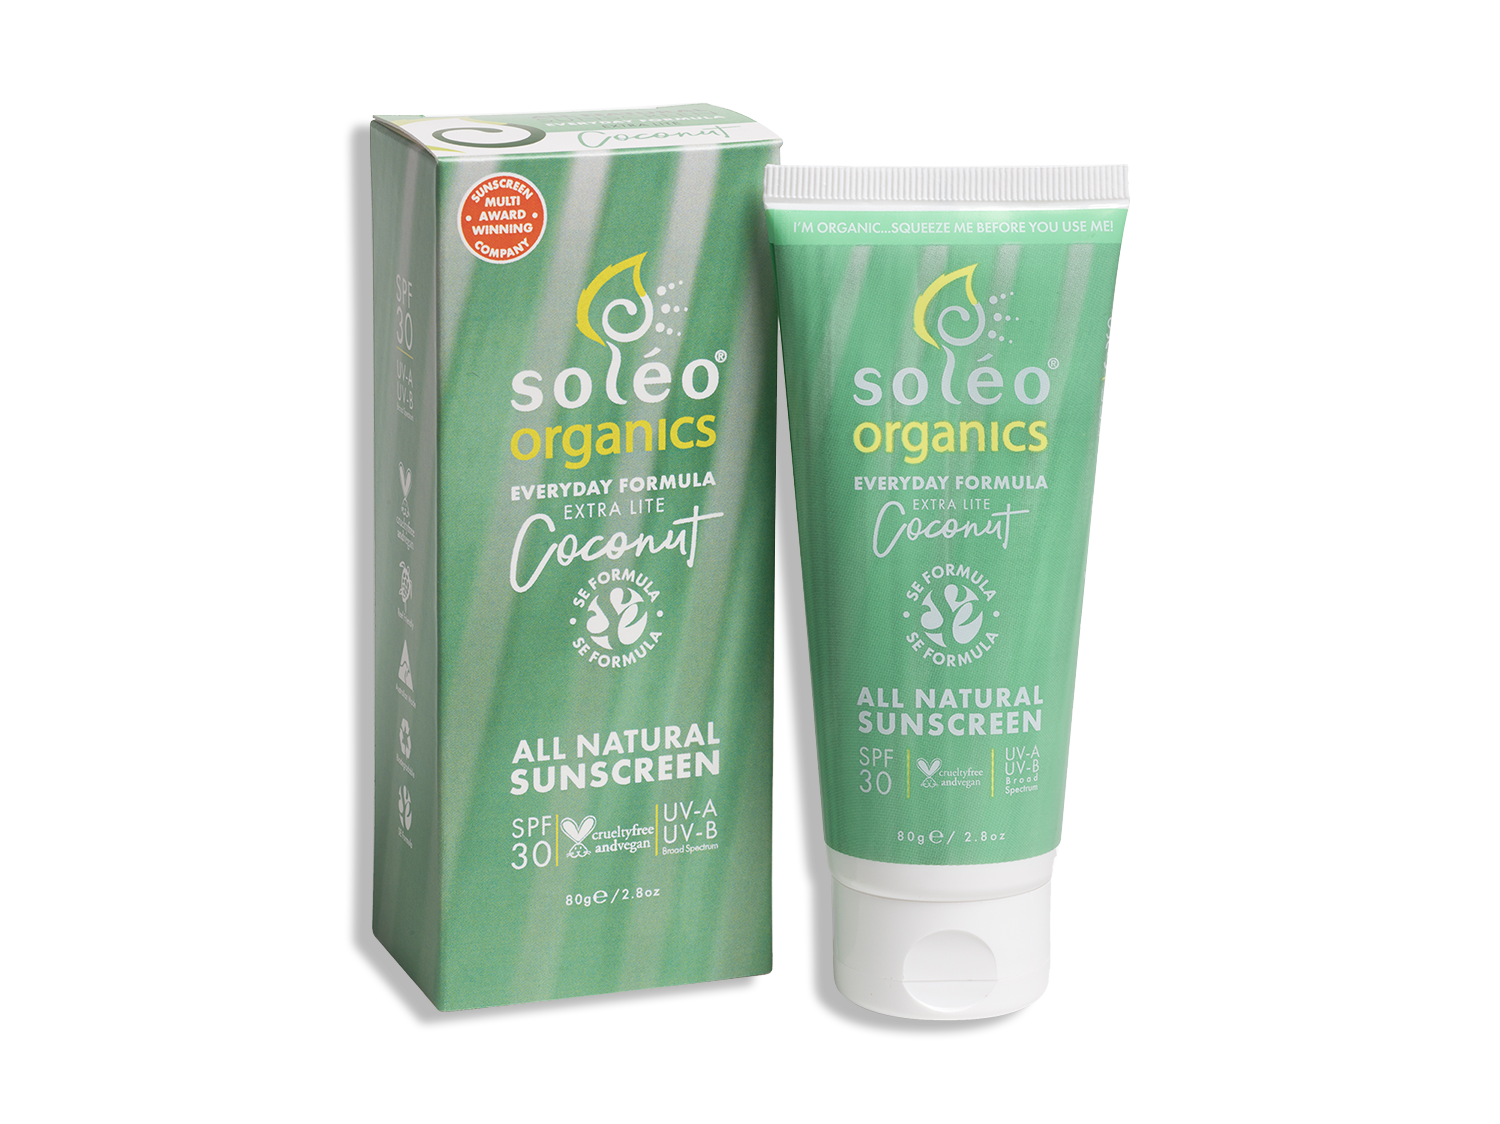 Soleo Organics everyday extralite coconut scented sunscreen